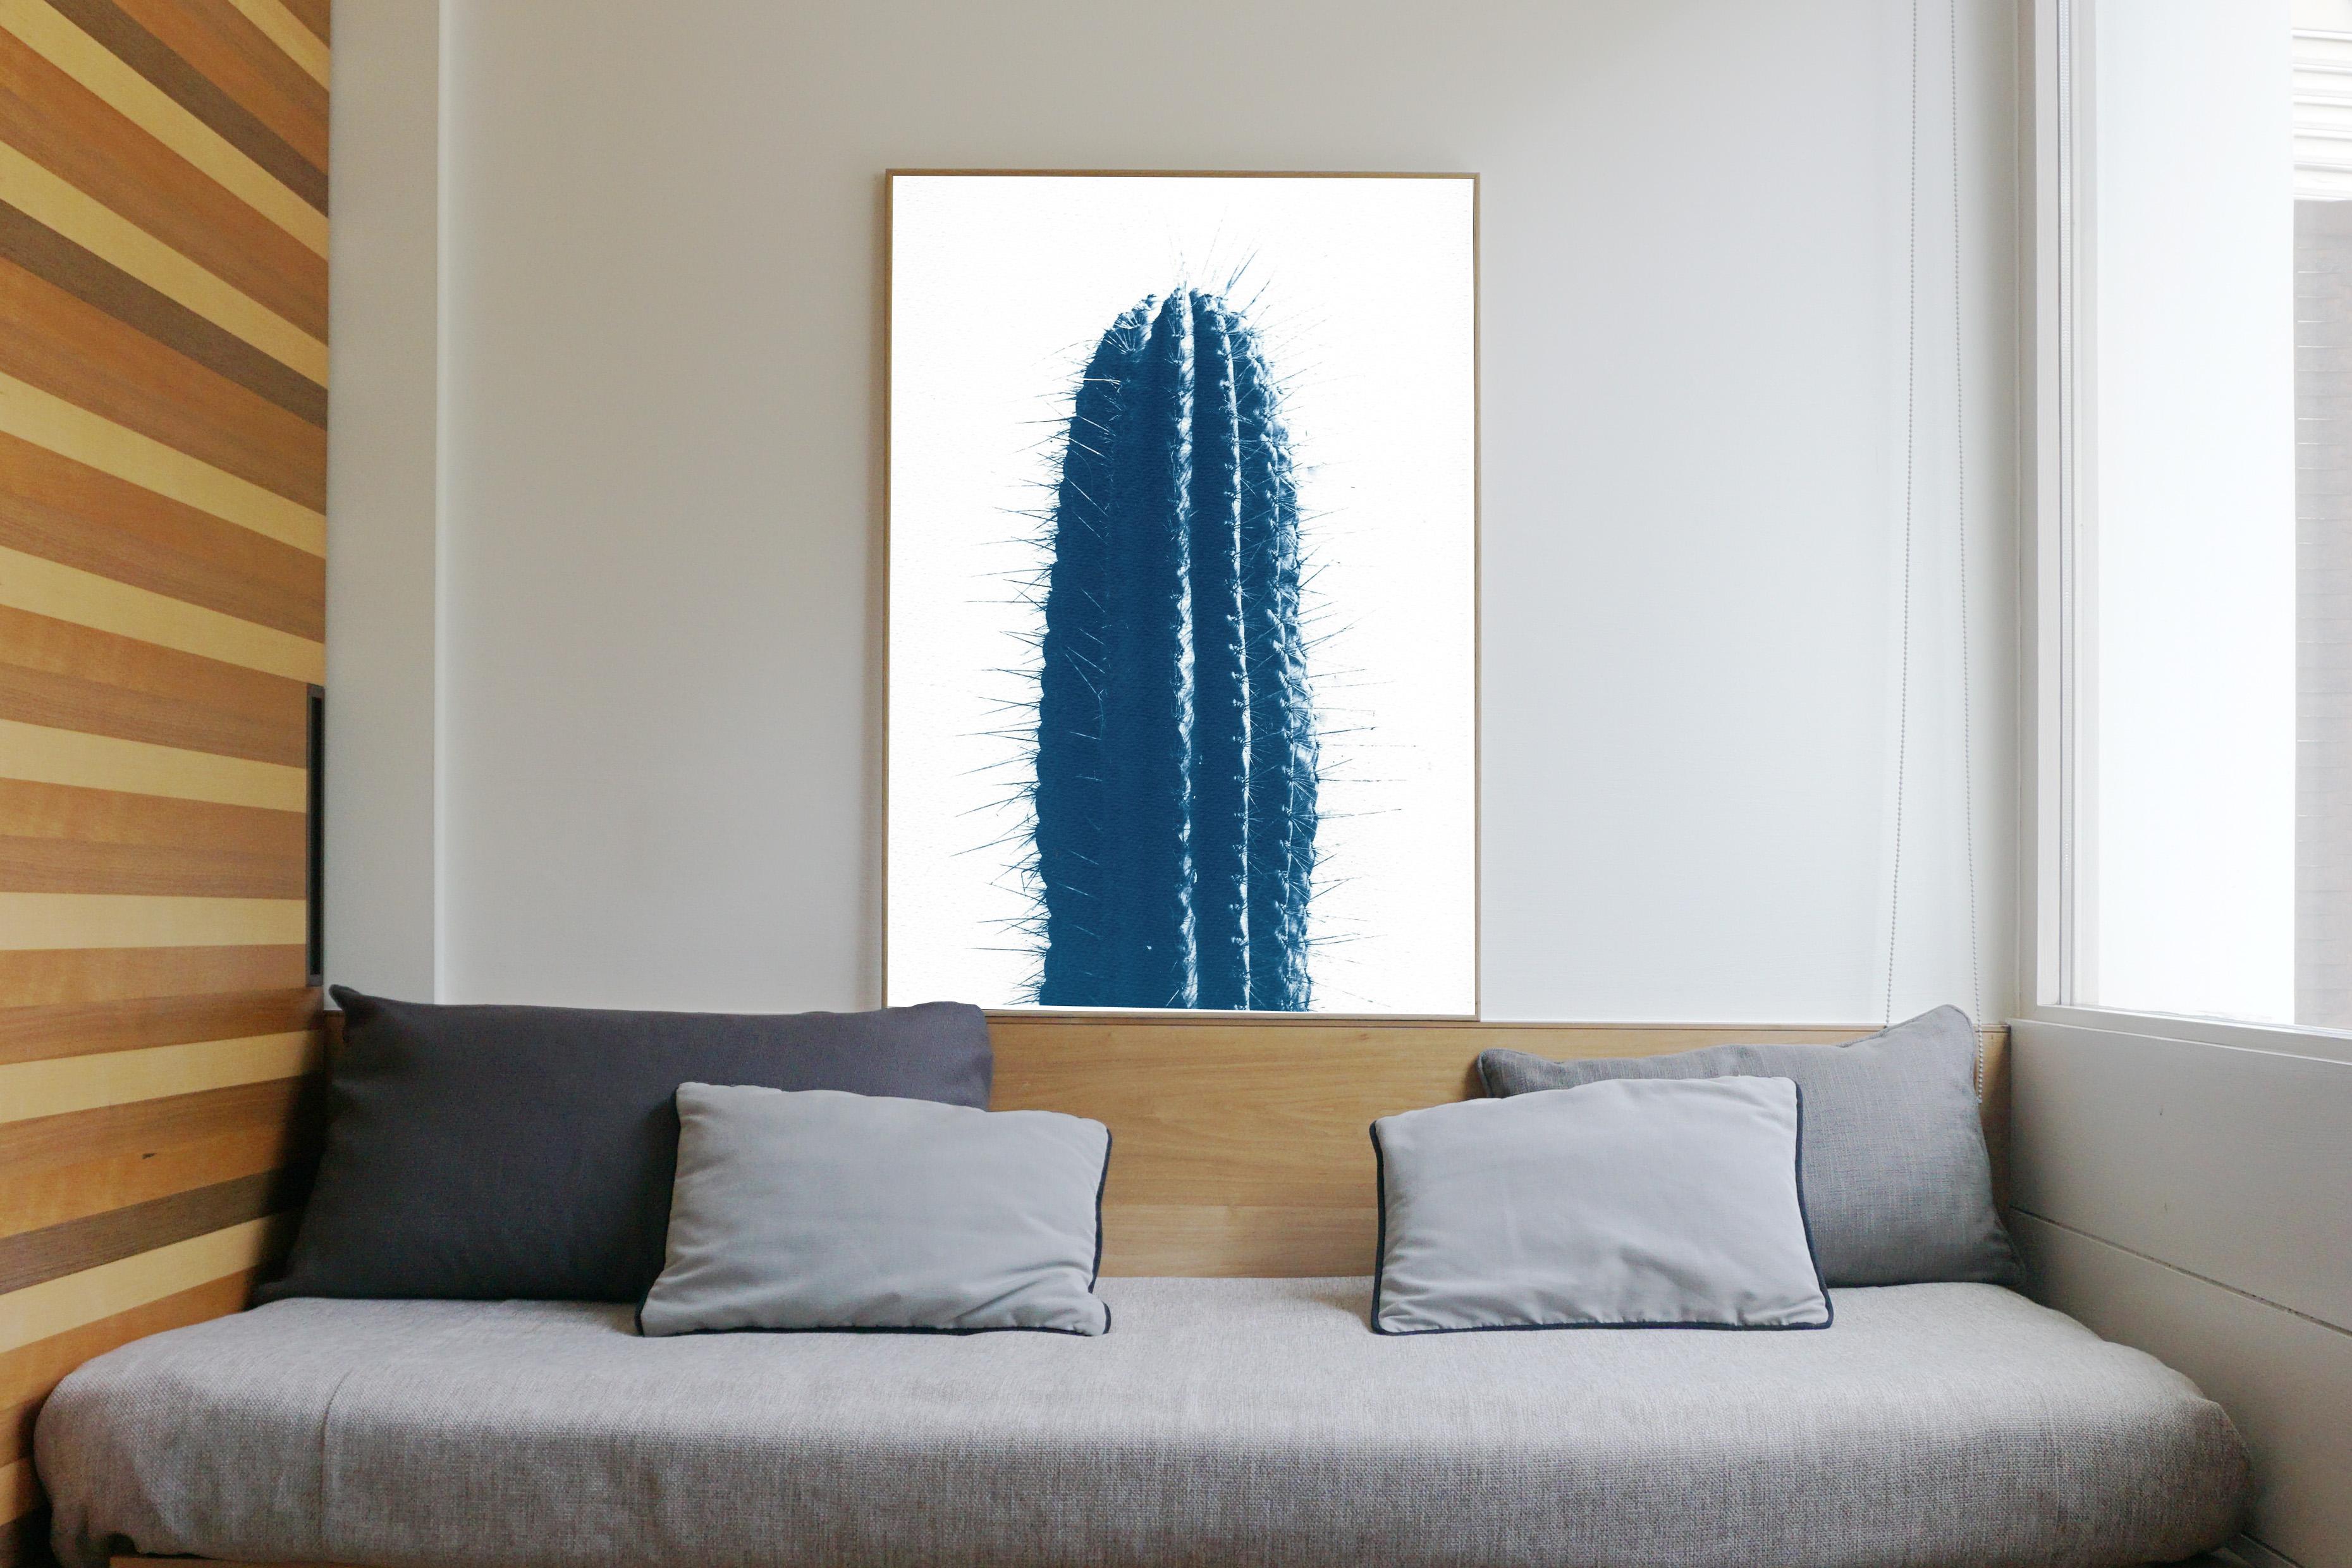 extra large cactus